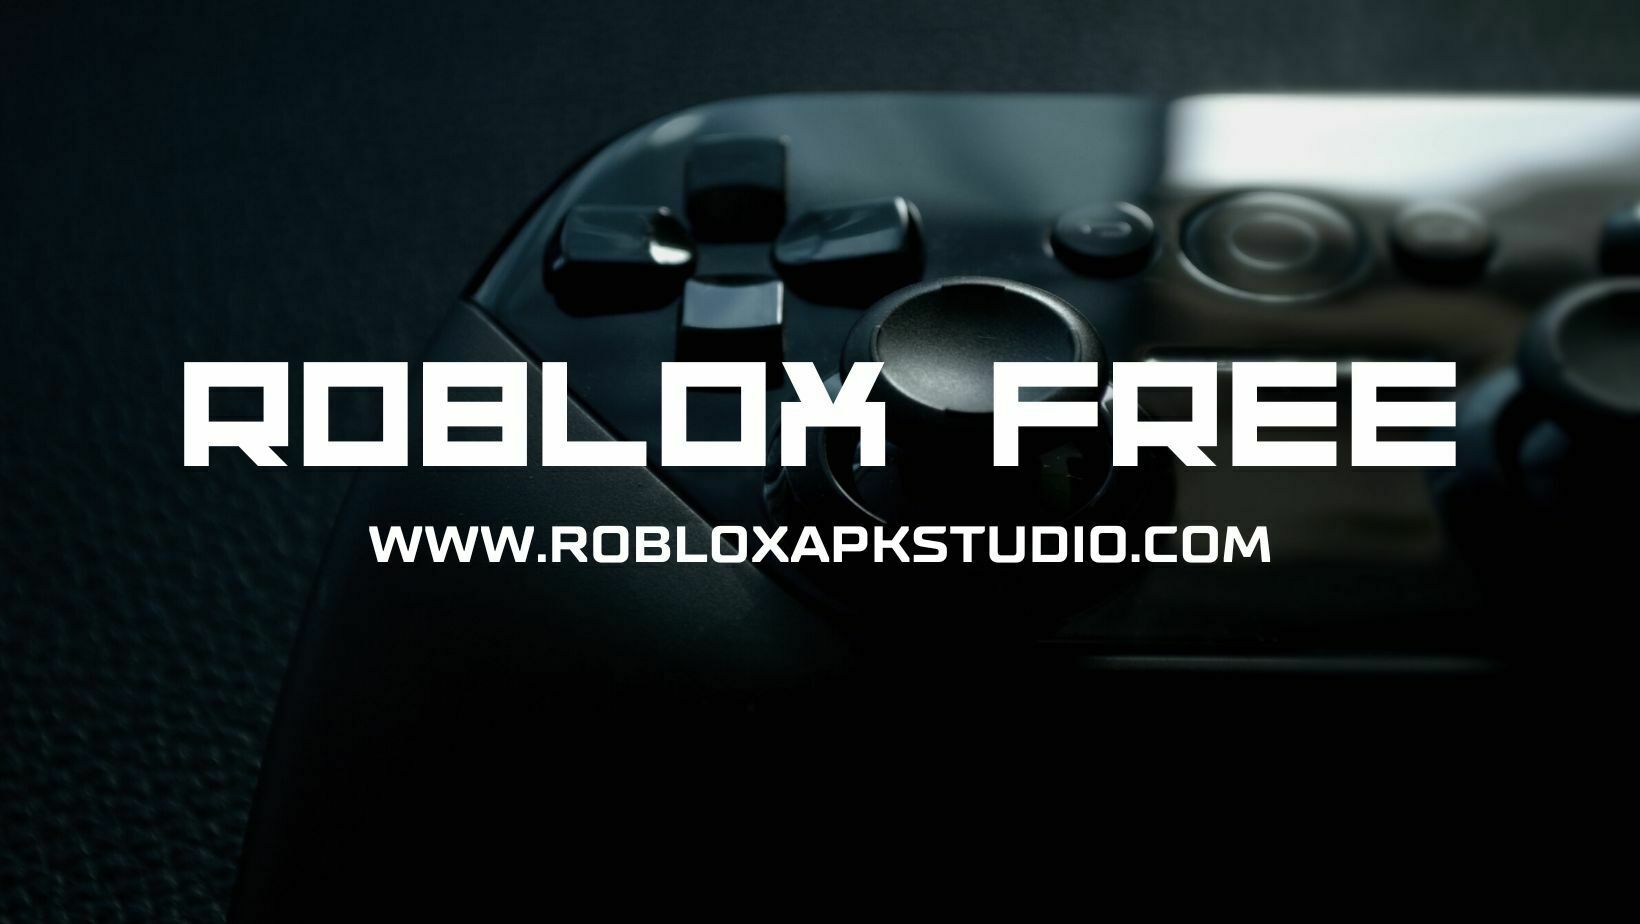 Roblox Free